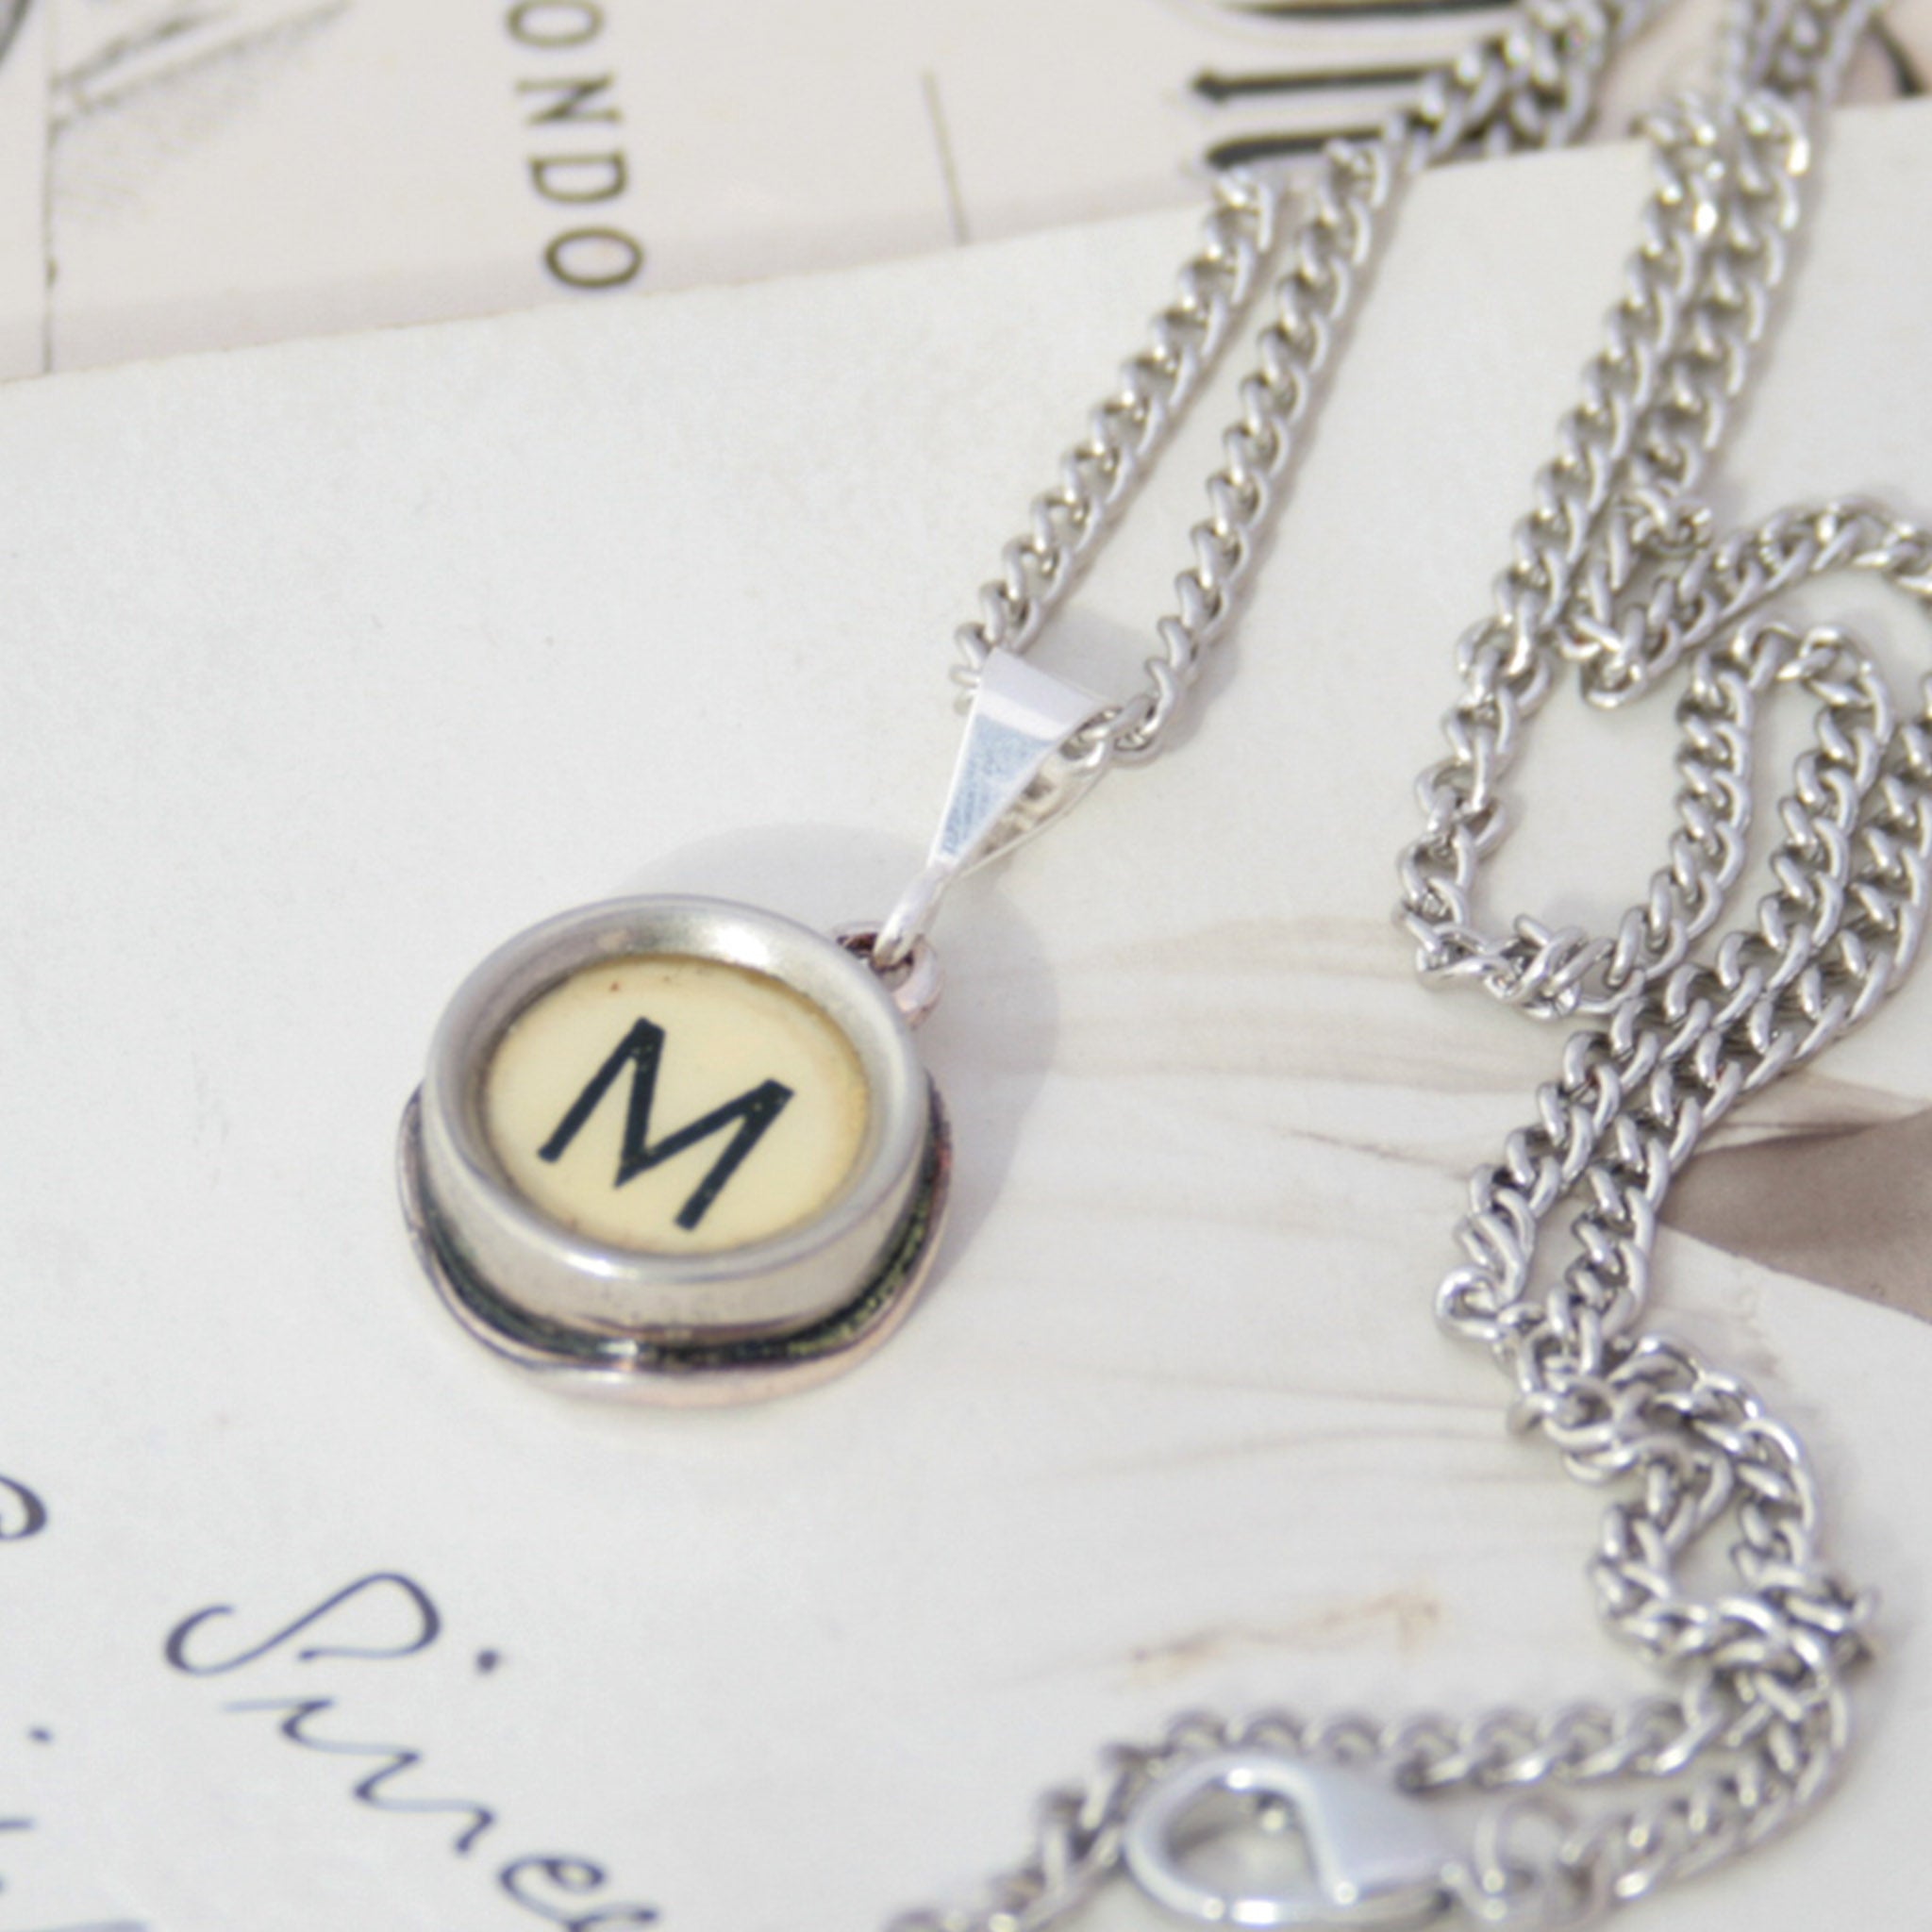 M letter necklace in ivory color made of vintage typewriter key